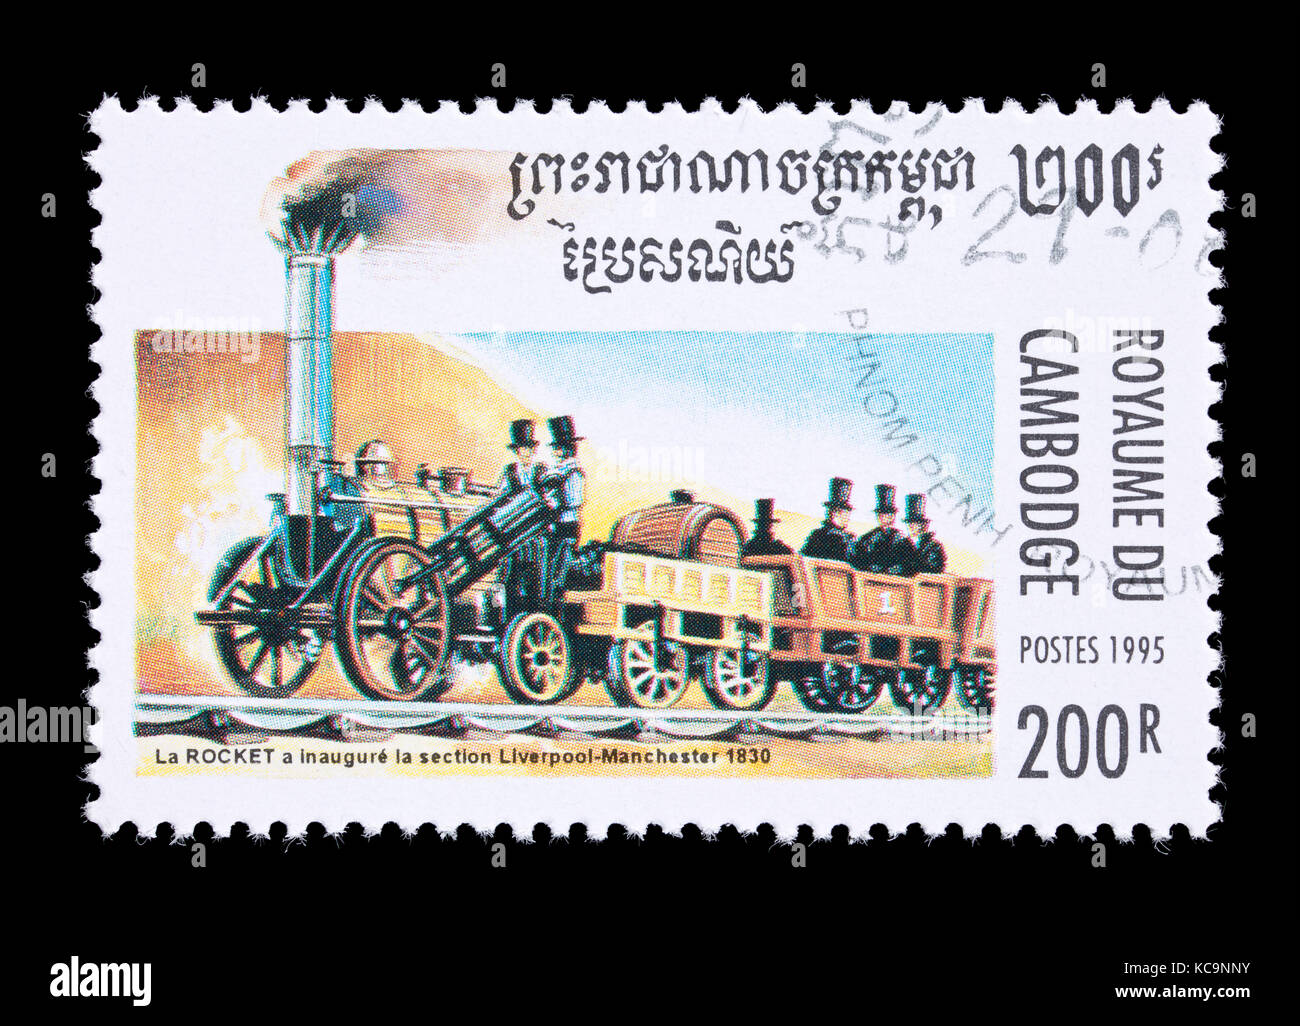 Briefmarke aus Kambodscha, George Stephensons Lokomotive Rocket. Stockfoto